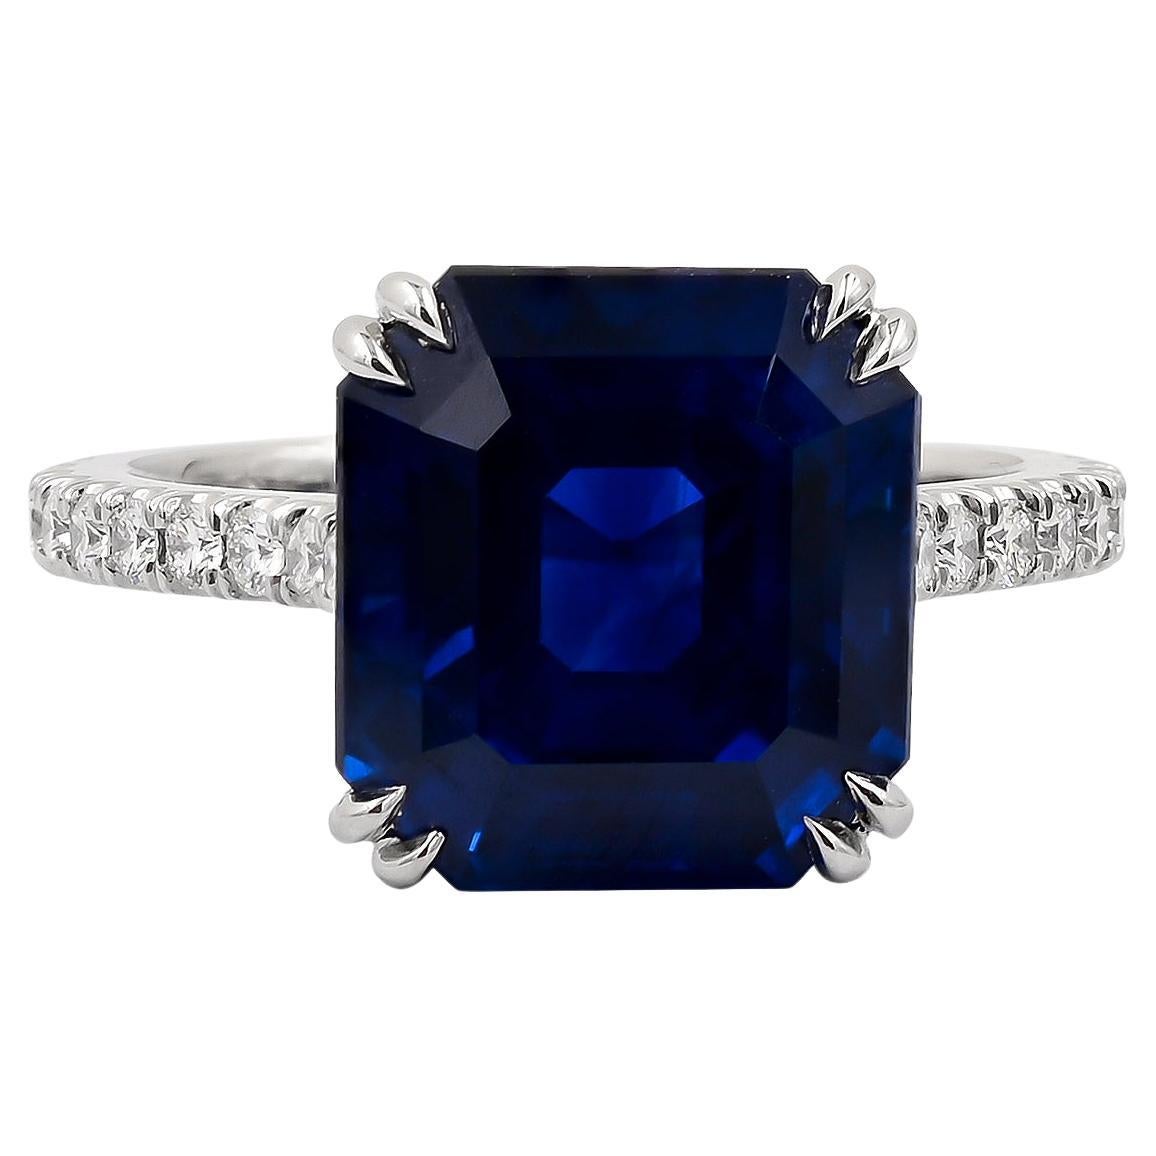 Spectra Fine Jewelry AGL Certified 8.06 Carat Ceylon Sapphire Diamond Ring For Sale